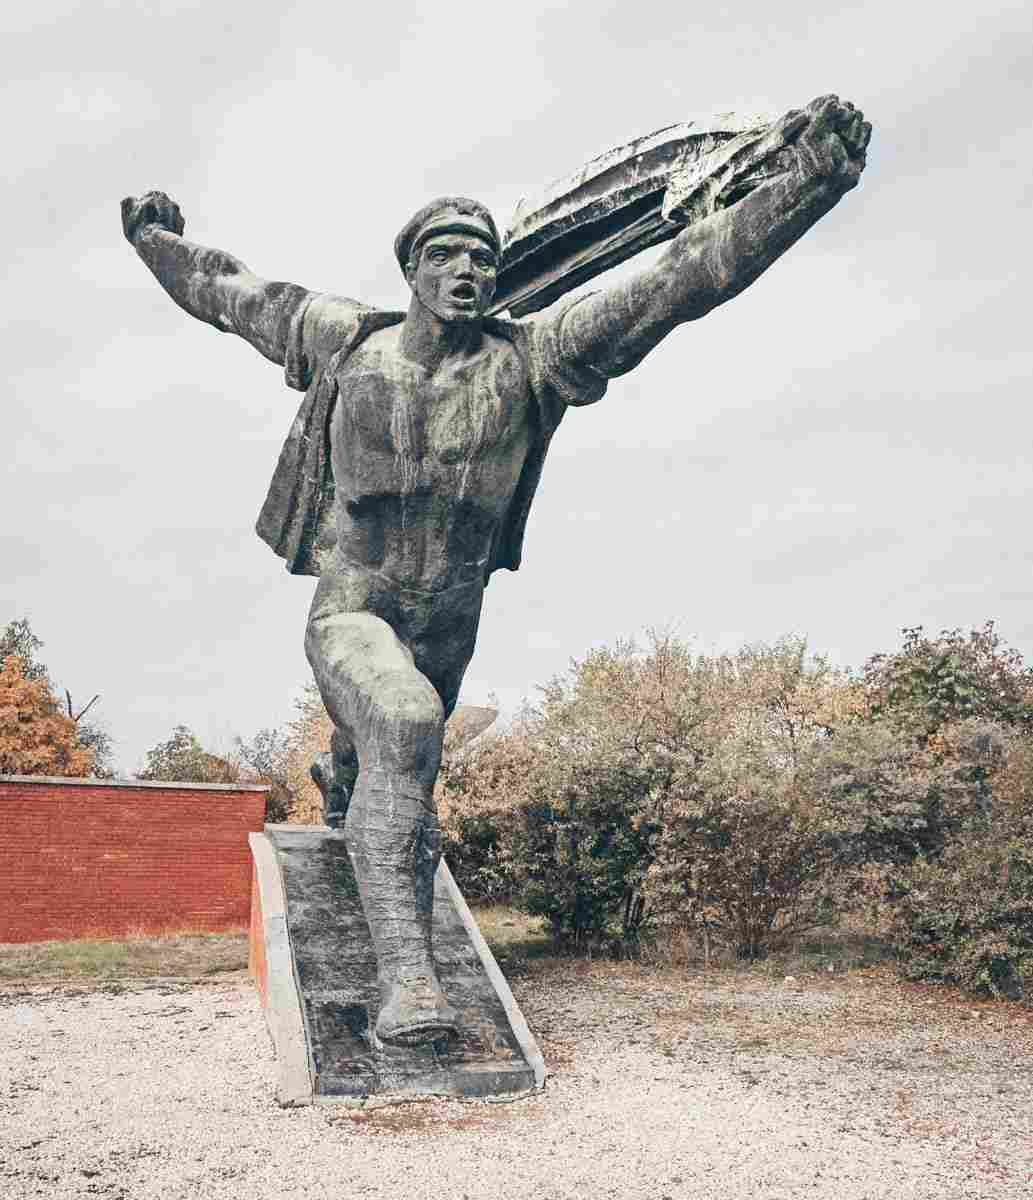 Budapest sights: The famous Herculean communist worker statue at Memento Park